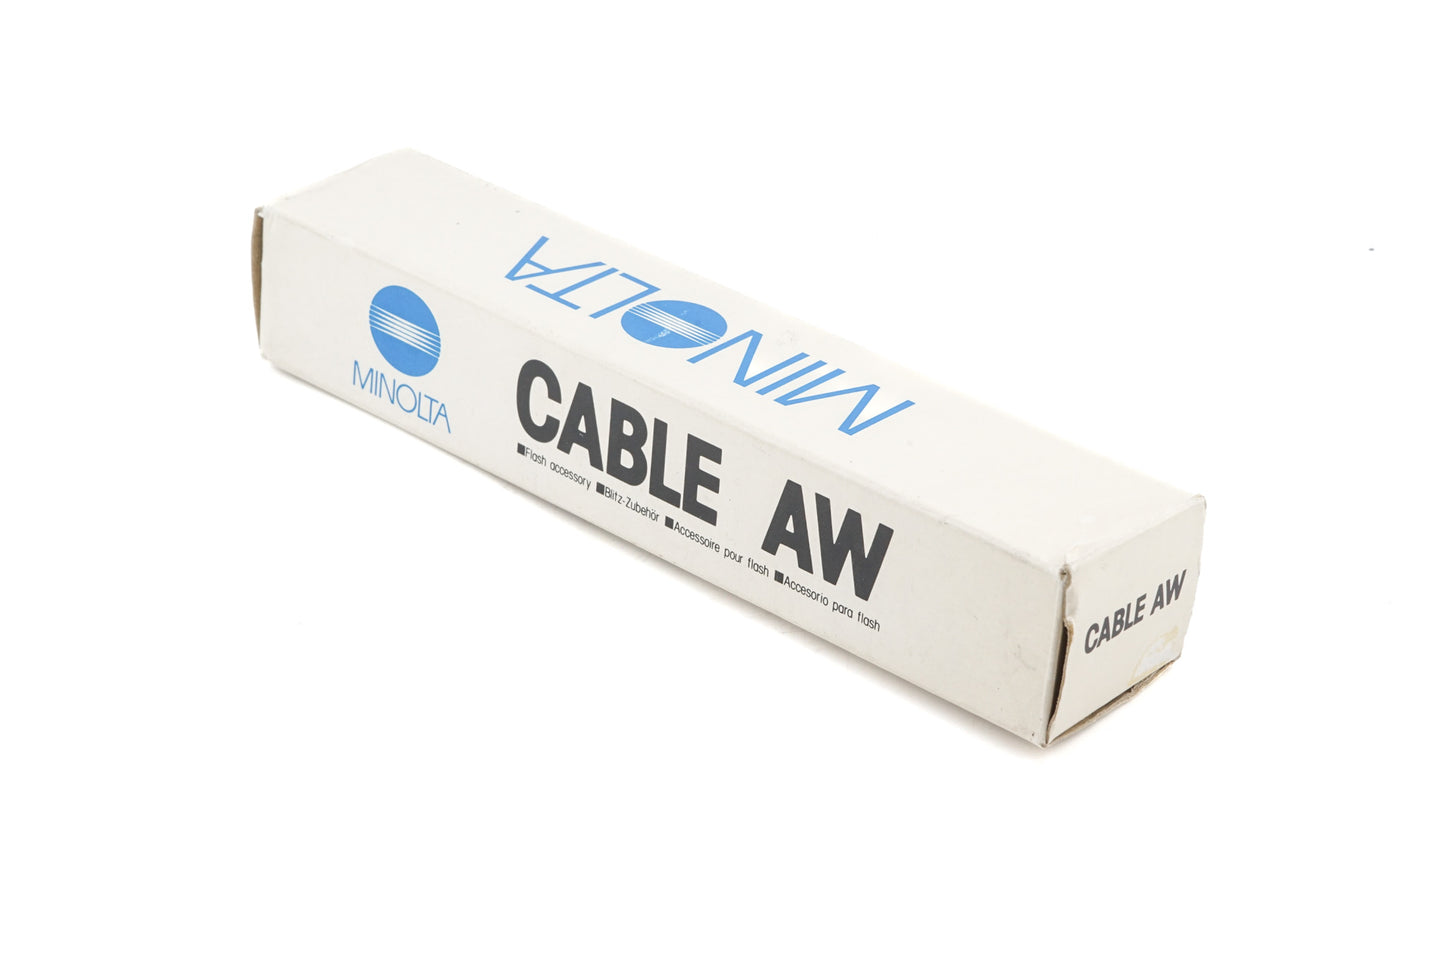 Minolta Cable AW